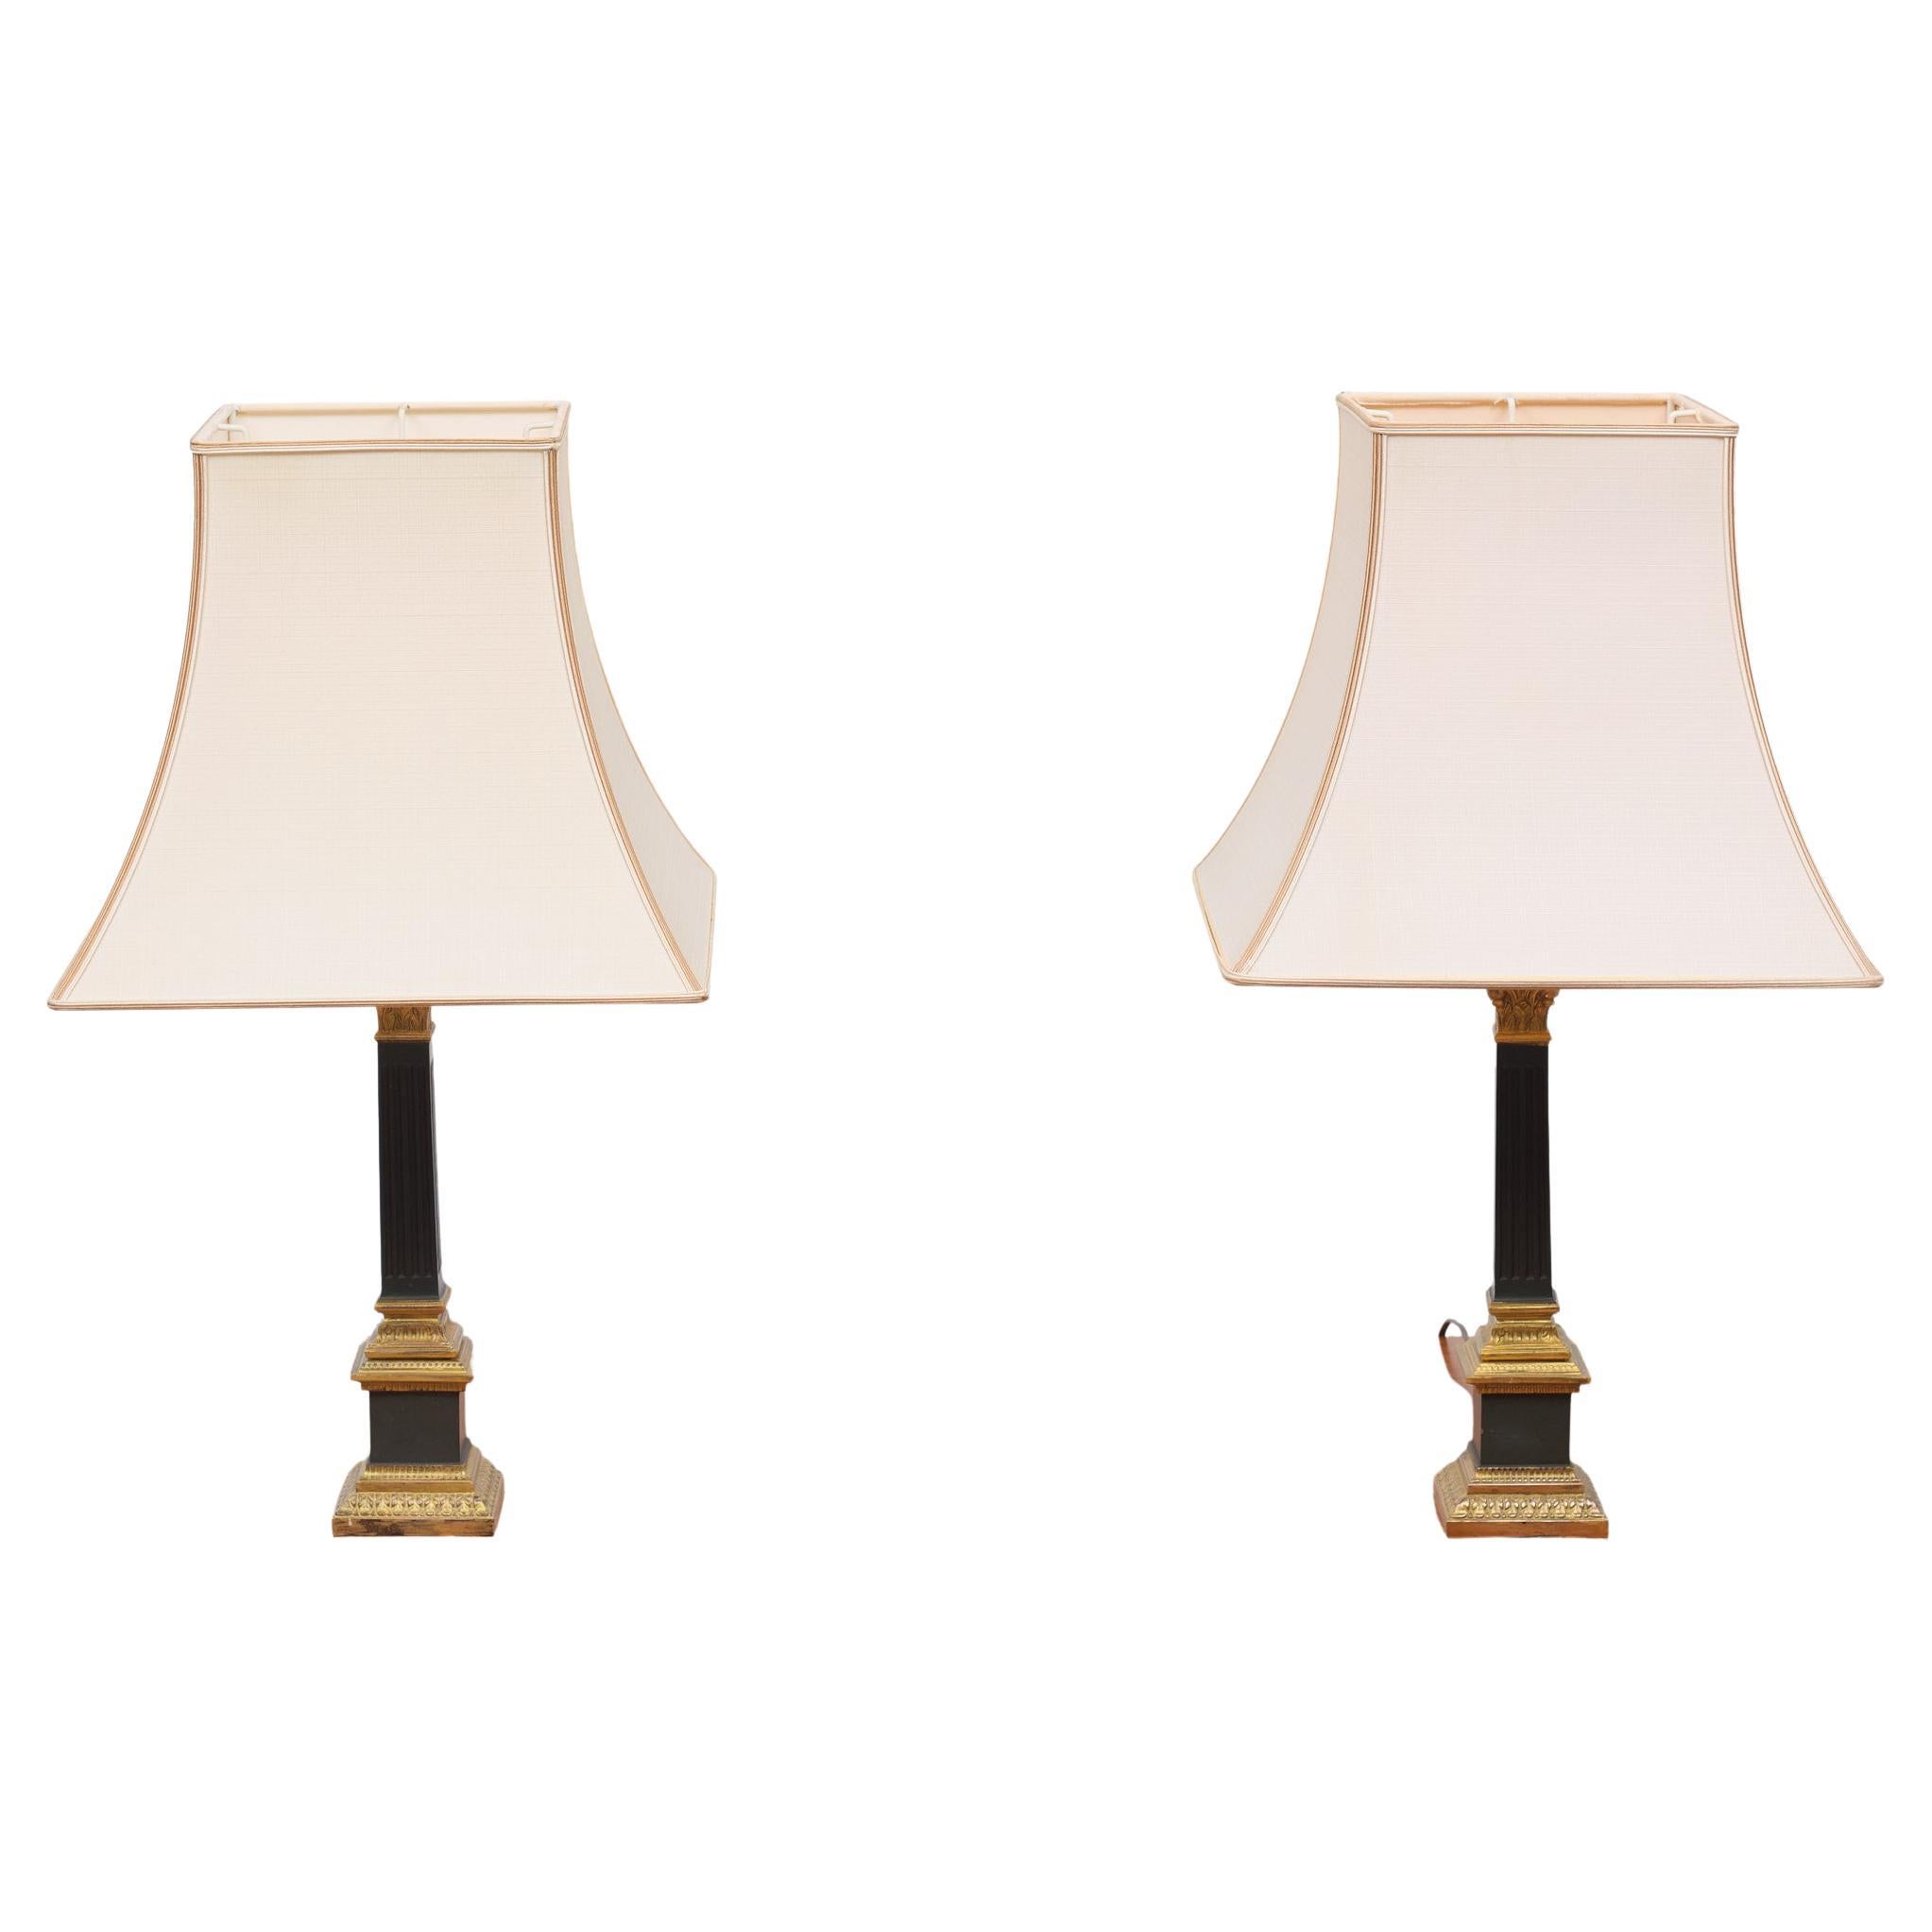 “Loevsky & Loevsky Classical Greek Colum Table lamps 